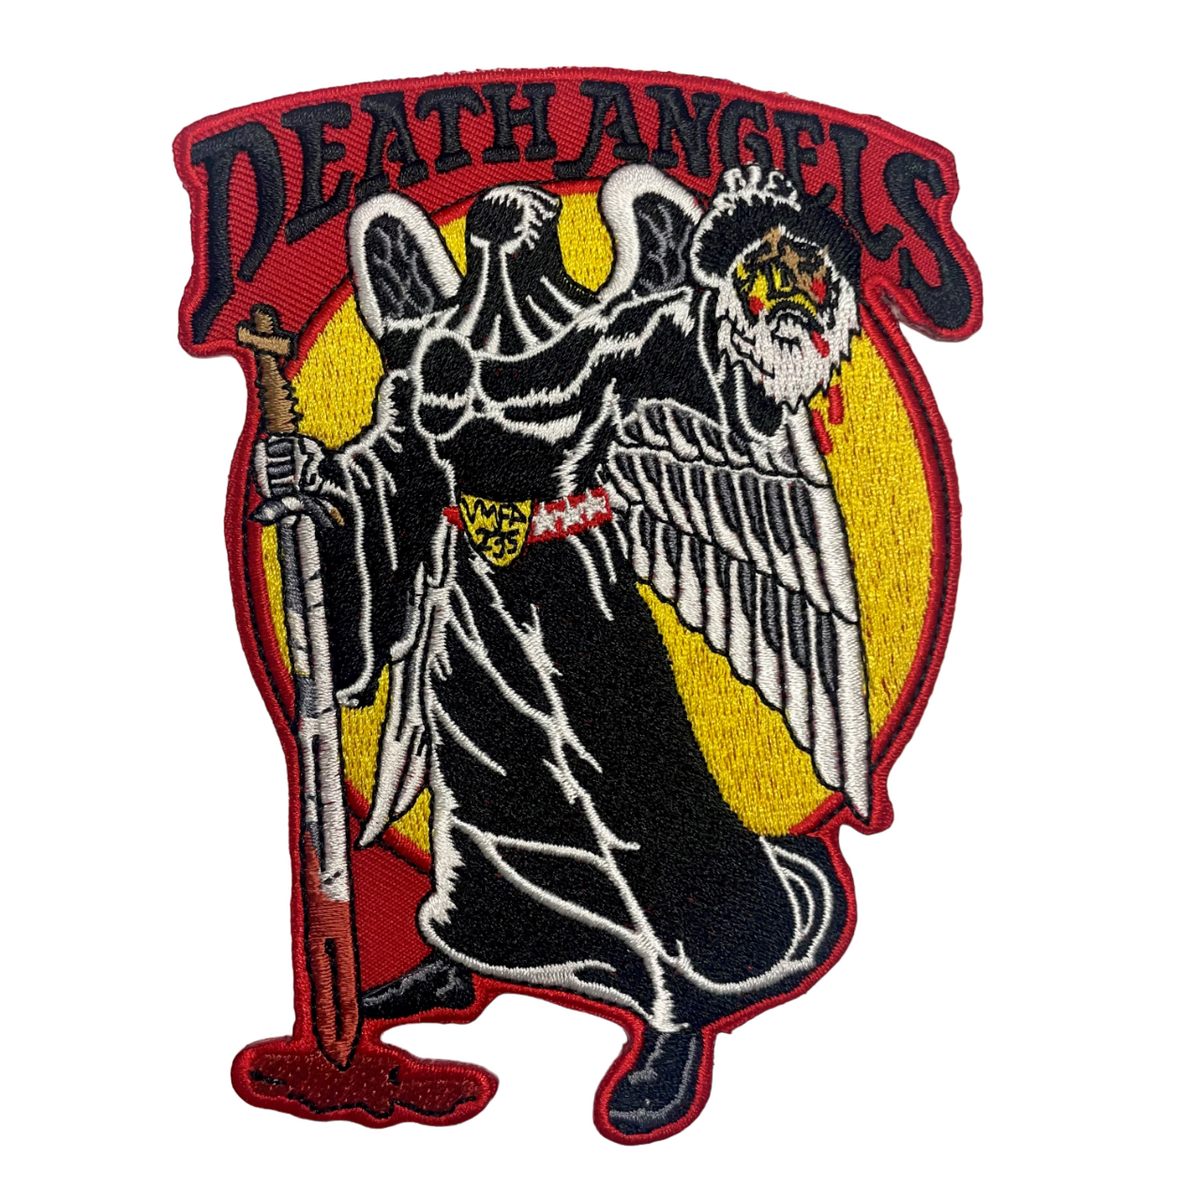 VMFA-235 1979 Death Angels - Marine Fighter Attack Squadron USMC Patch